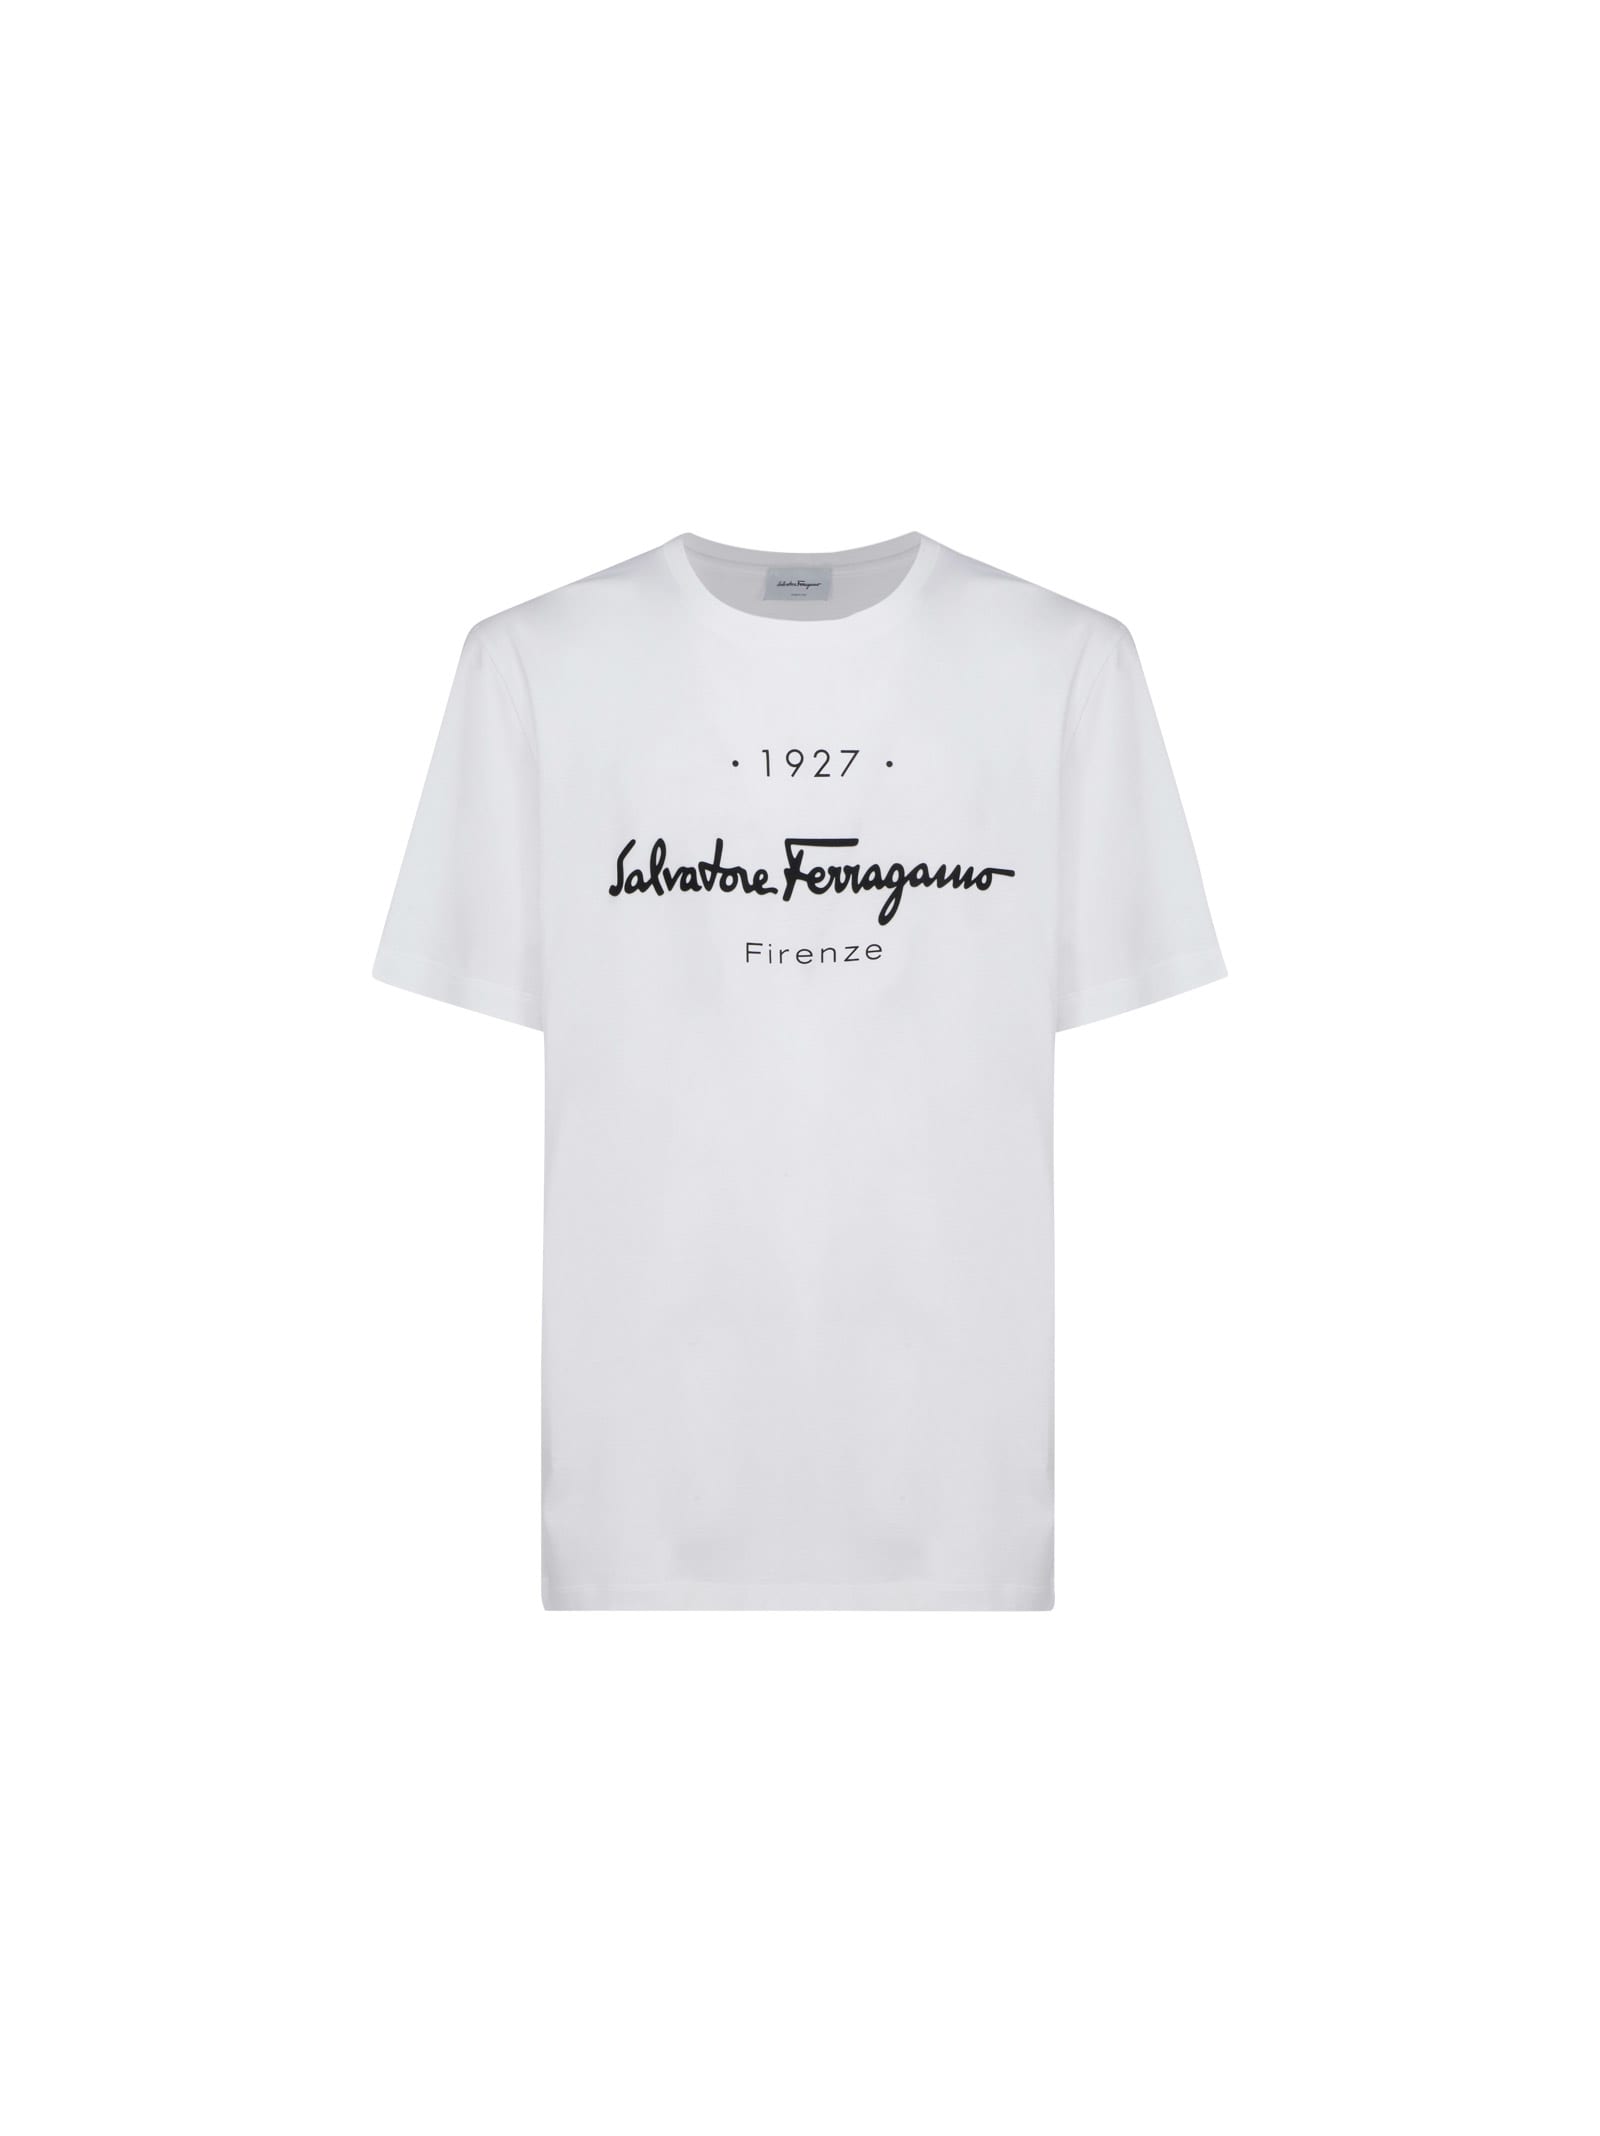 Ferragamo Salvatore Ferragamo T-shirt